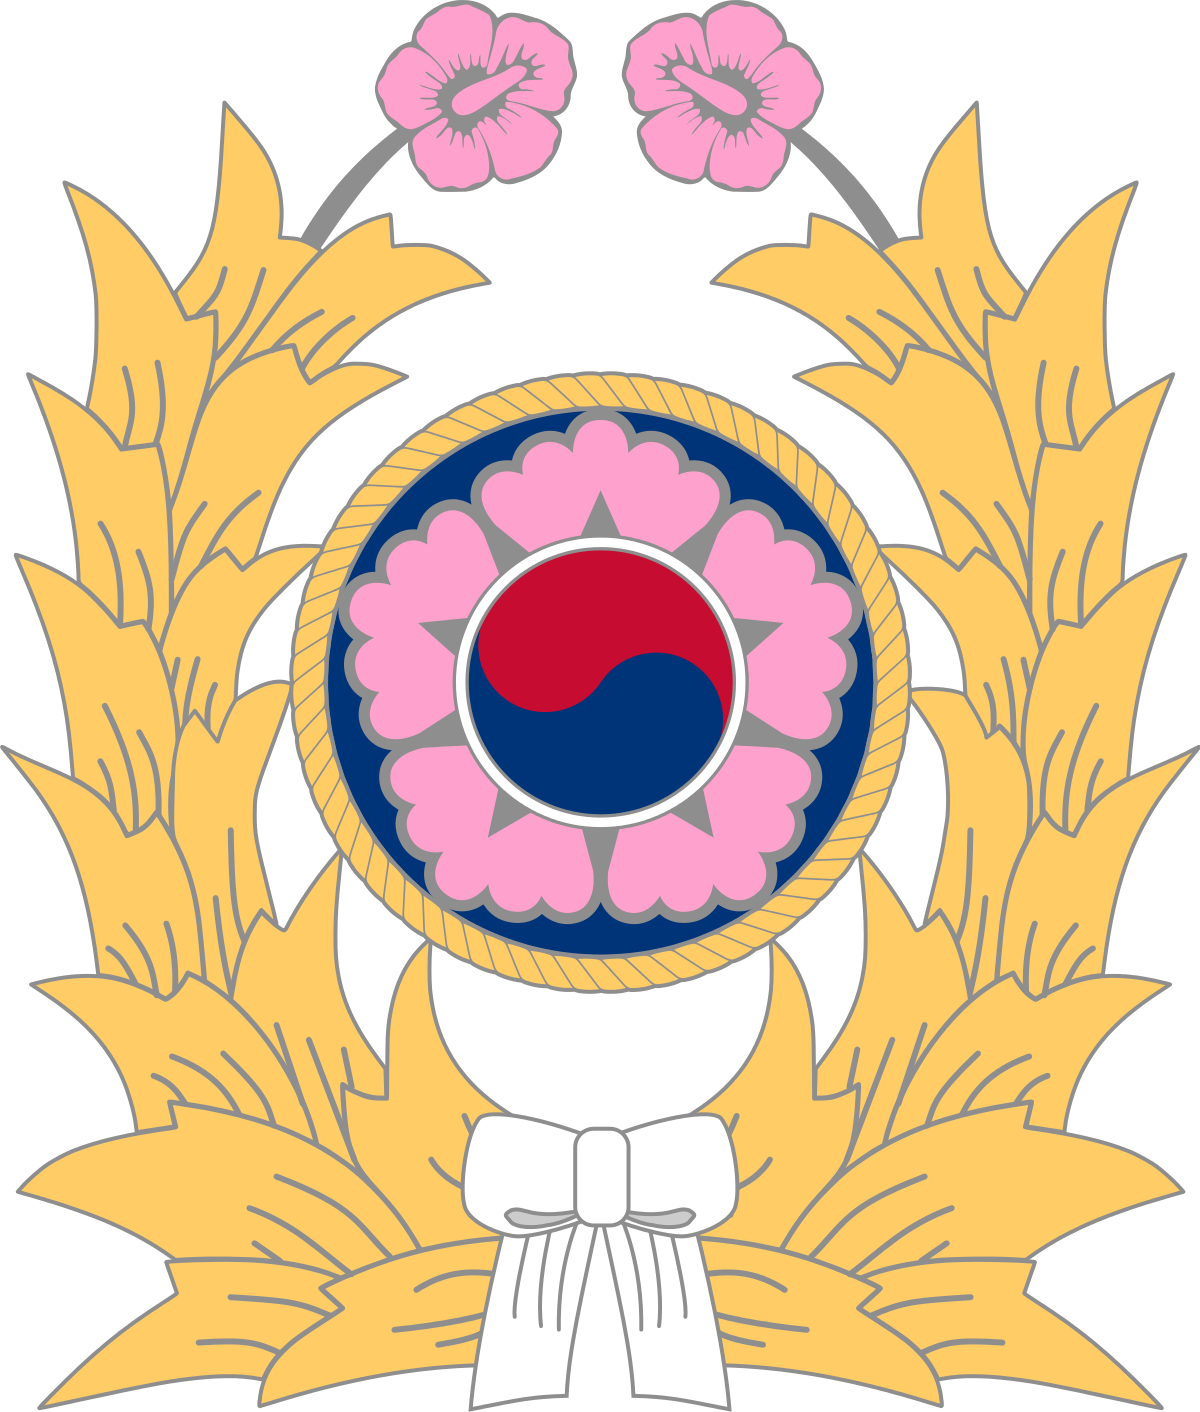 Republic Of Korea Army (1200x1412)